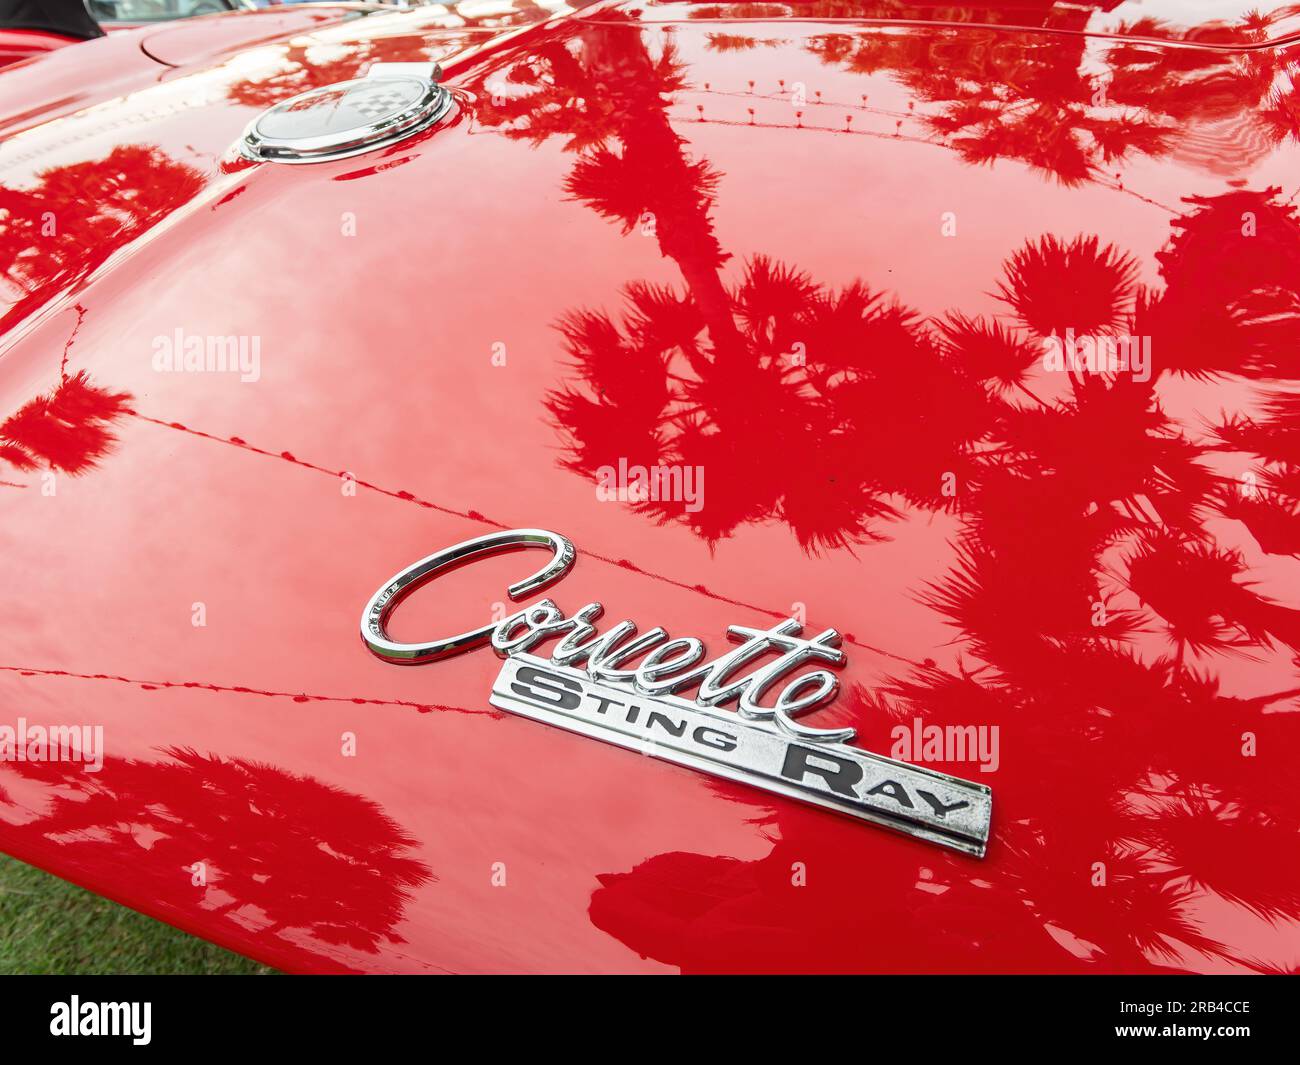 Logo de rojo, modelo 1963 Chevrolet Corvette Stingray Convertible visto desde la parte trasera. Foto de stock